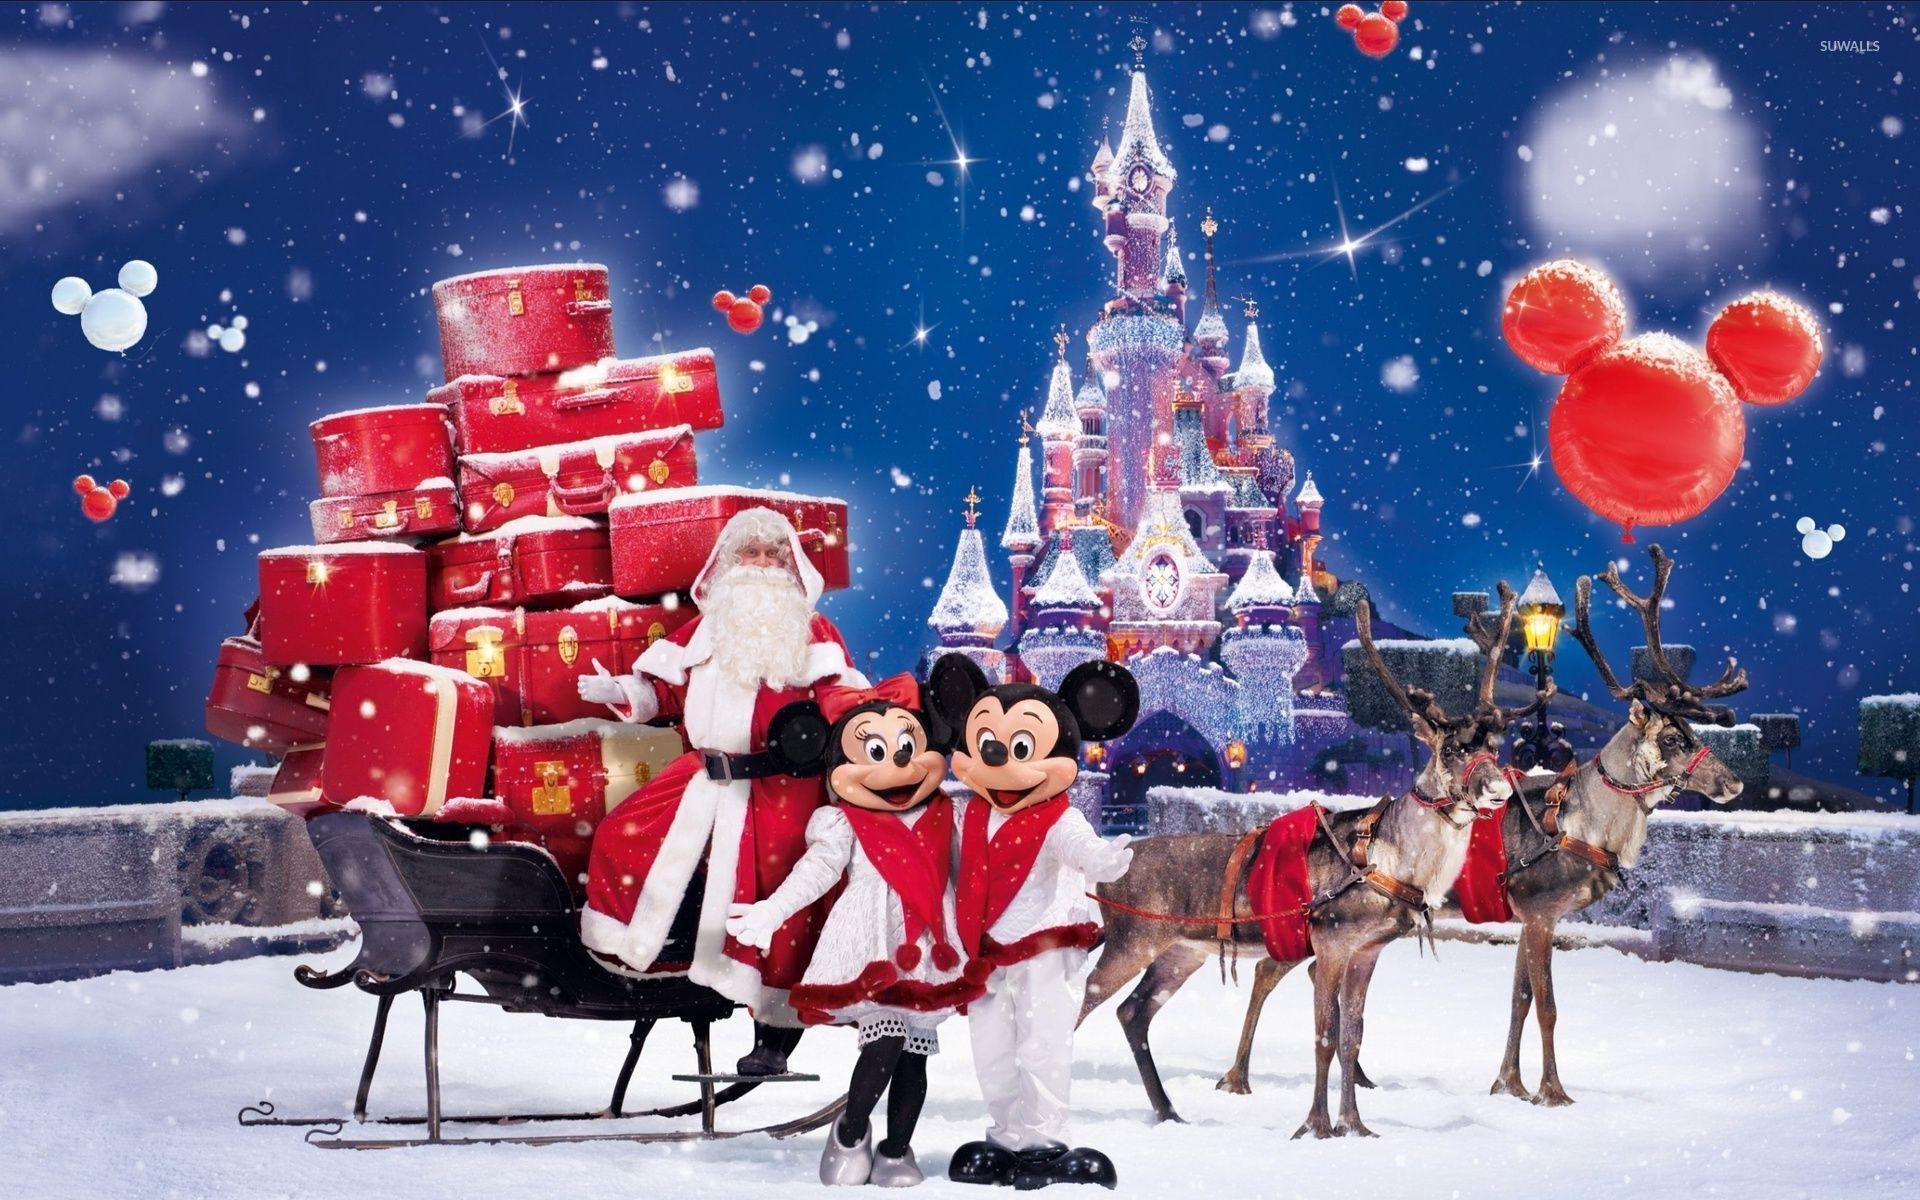 Santa Claus bringing gifts in a Disneyland park wallpaper